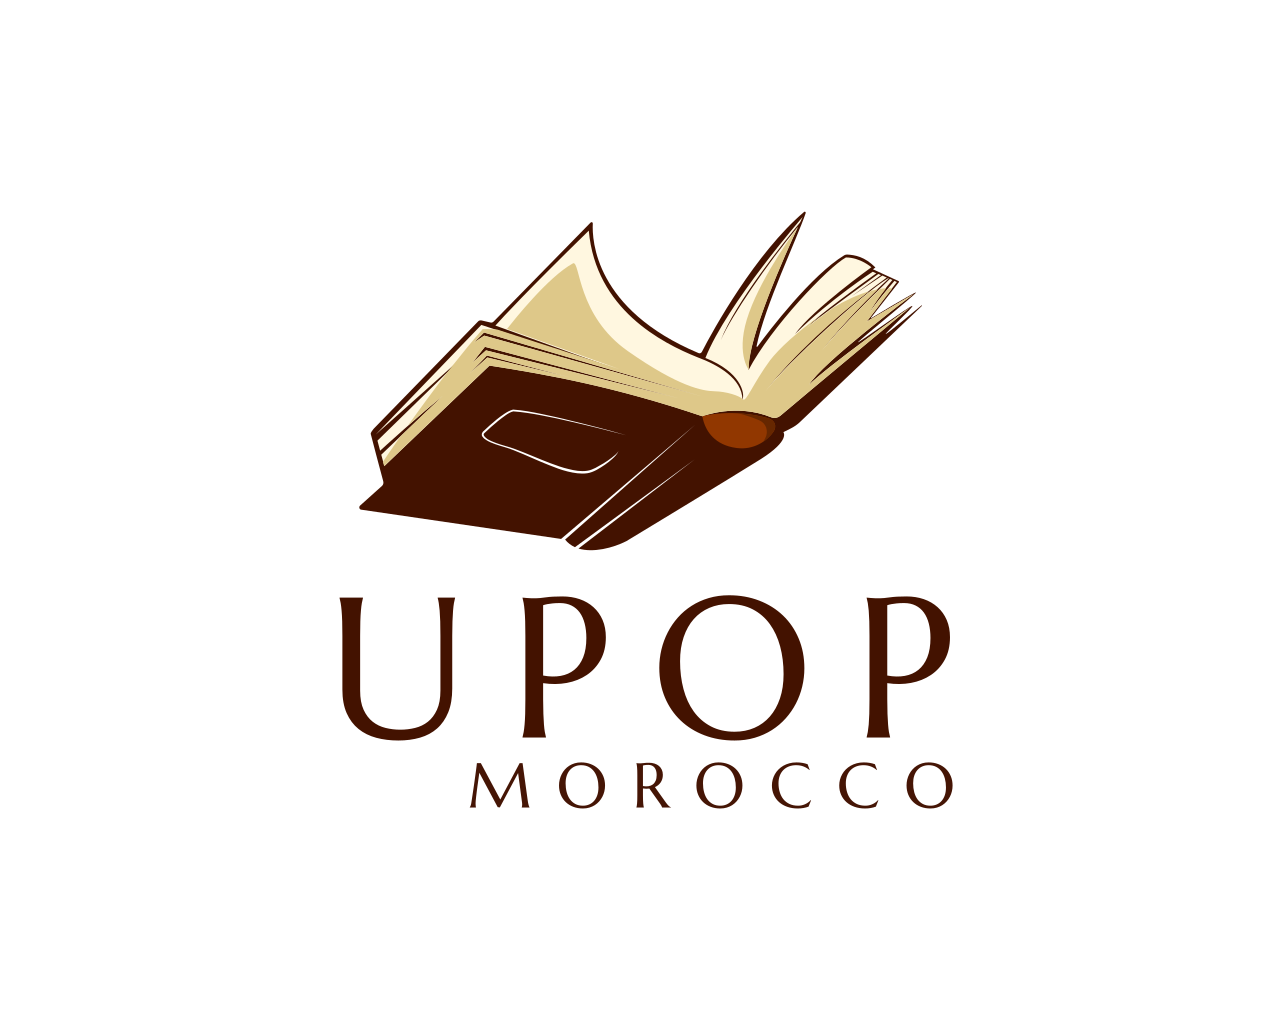 Upop Morocco